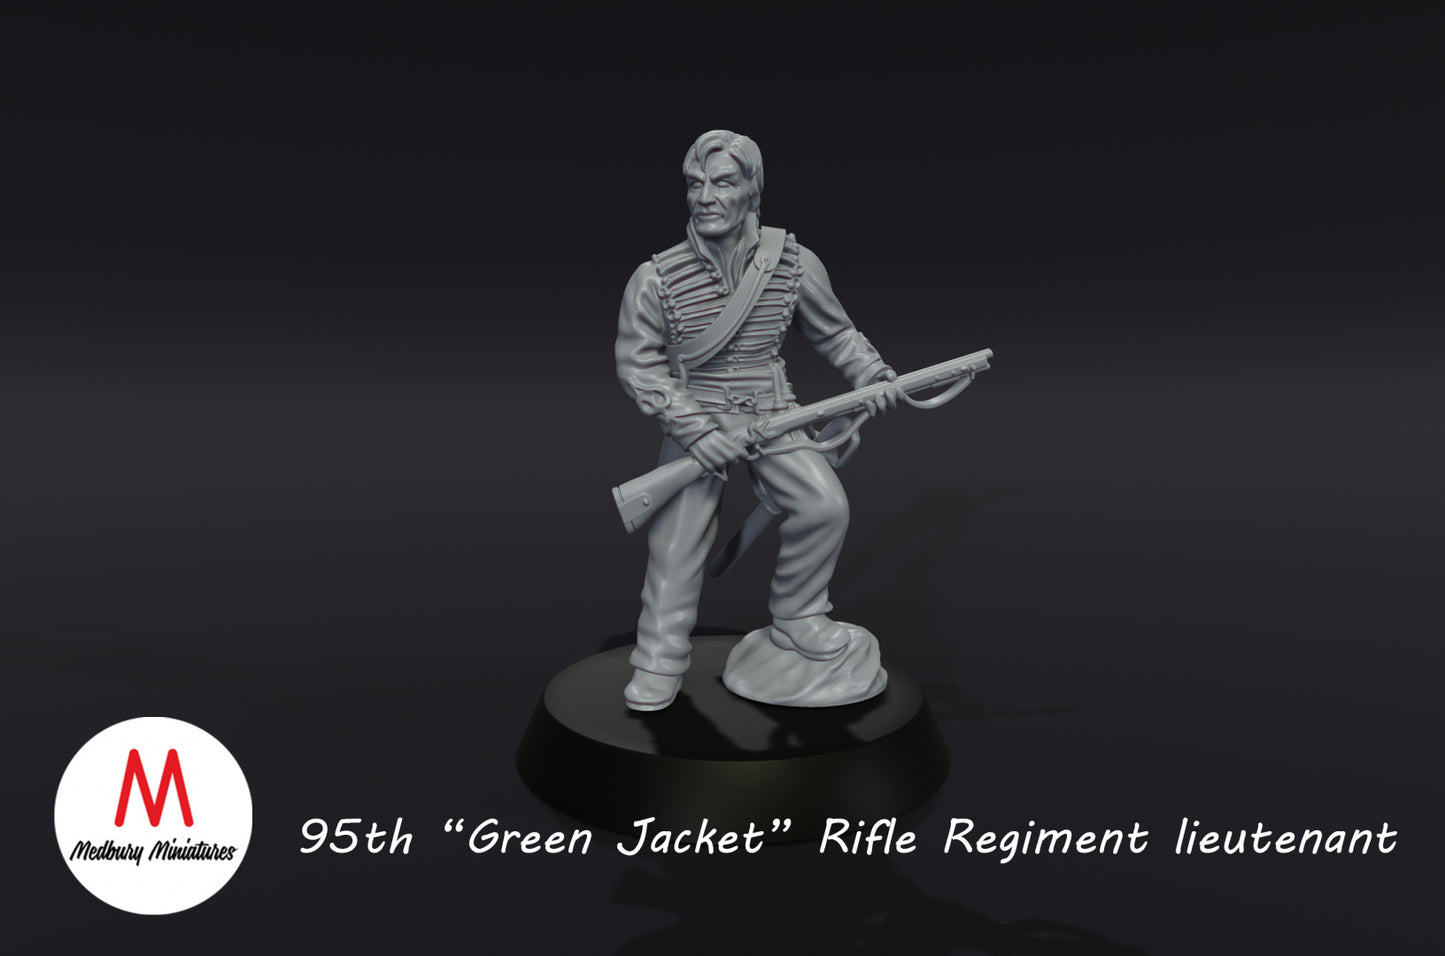 Leutnant des 95. Green Jacket Rifle Regiments